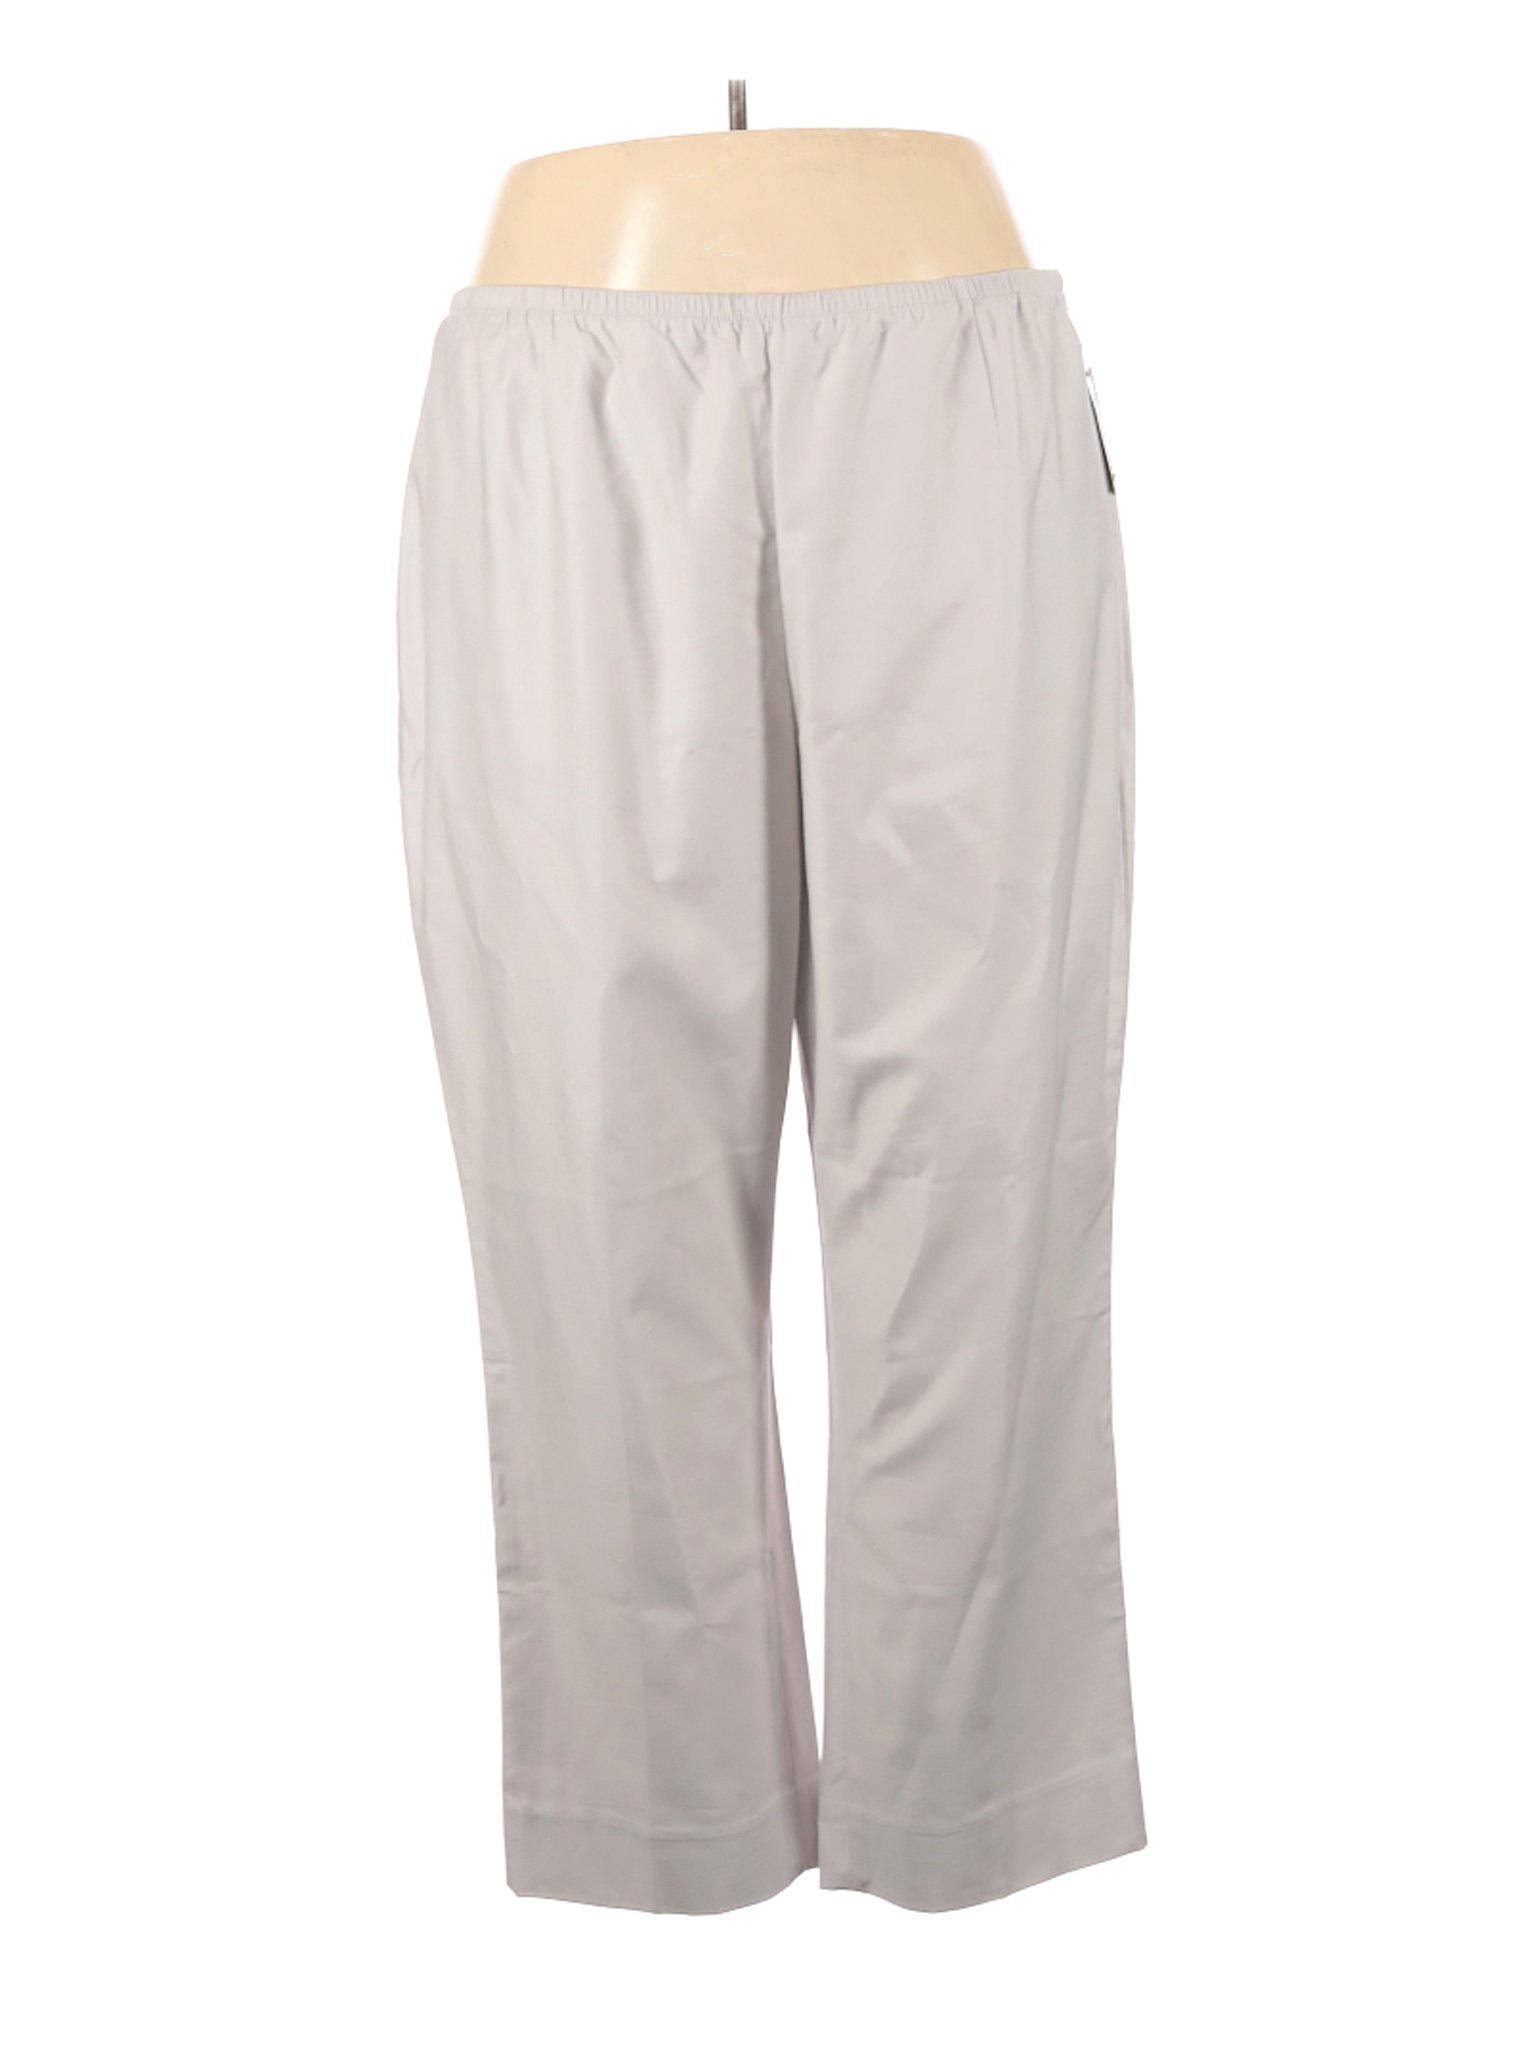 NWT Zozo Women Ivory Casual Pants 24 Plus | eBay